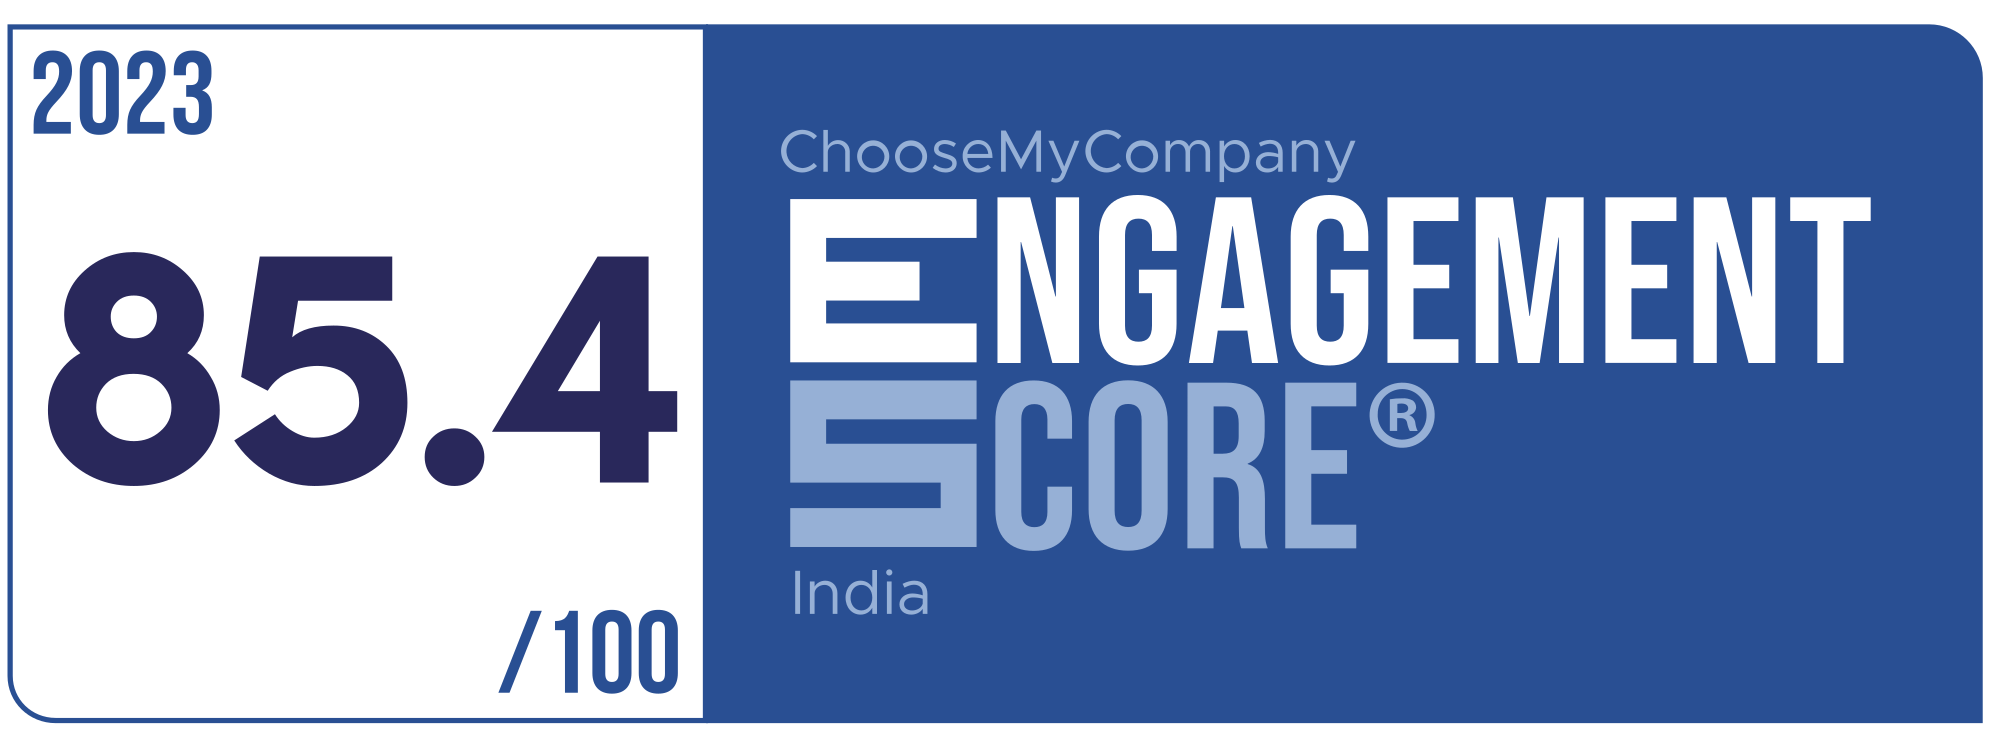 Label Engagement Score 2023 India